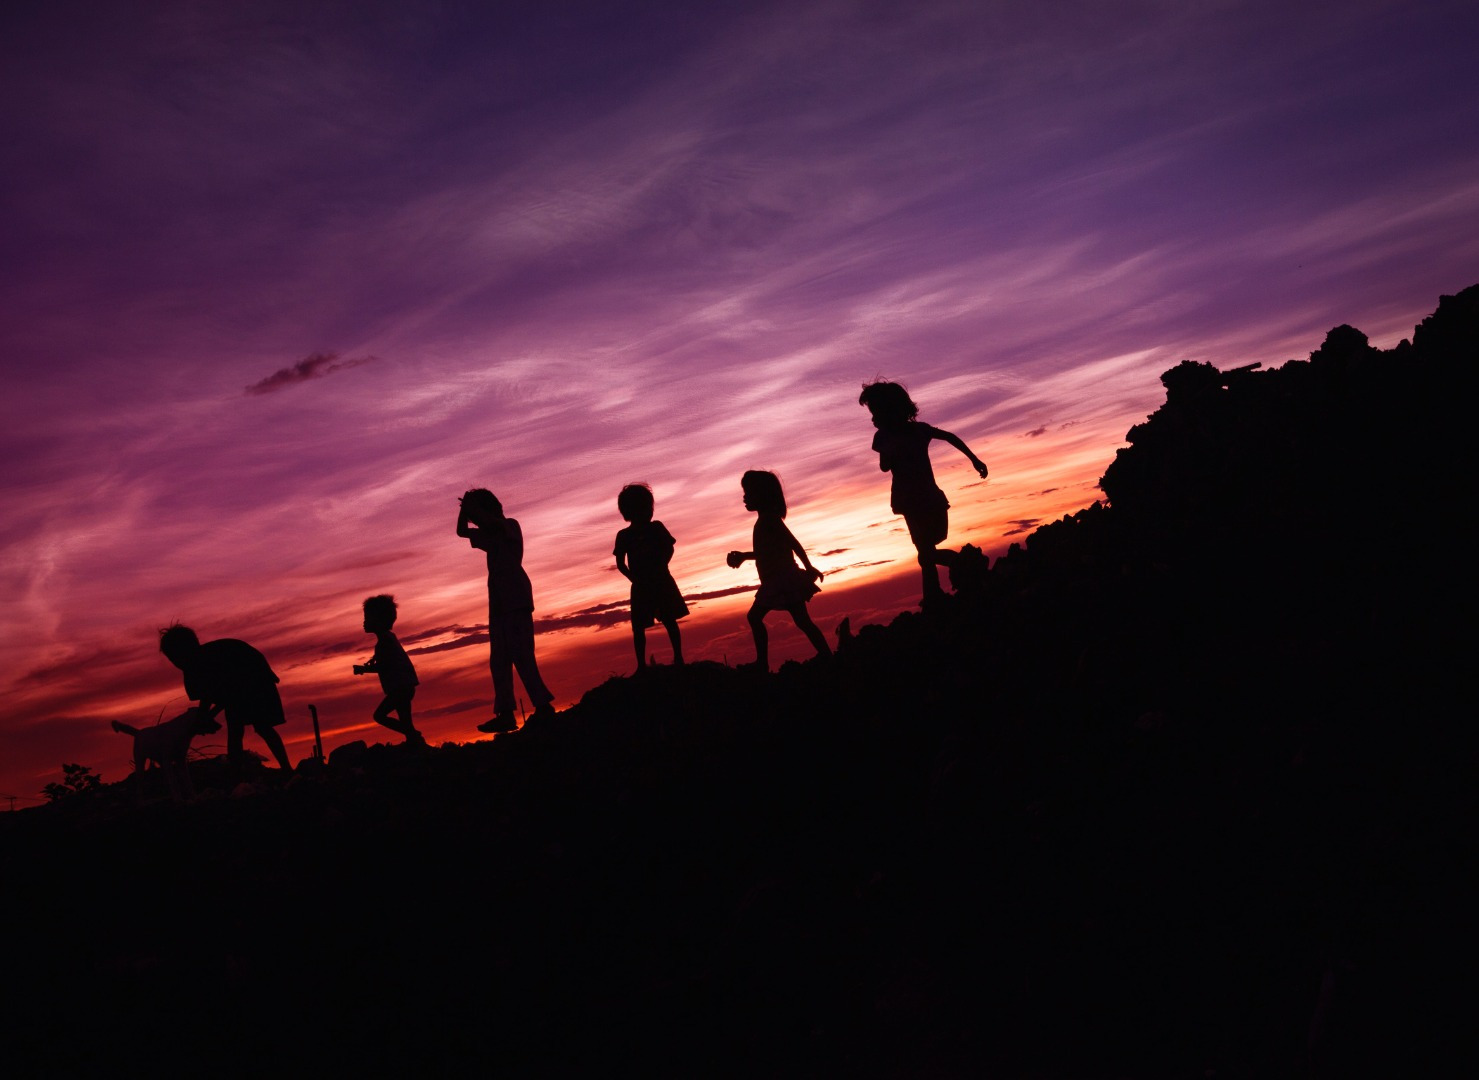 Children at sunset